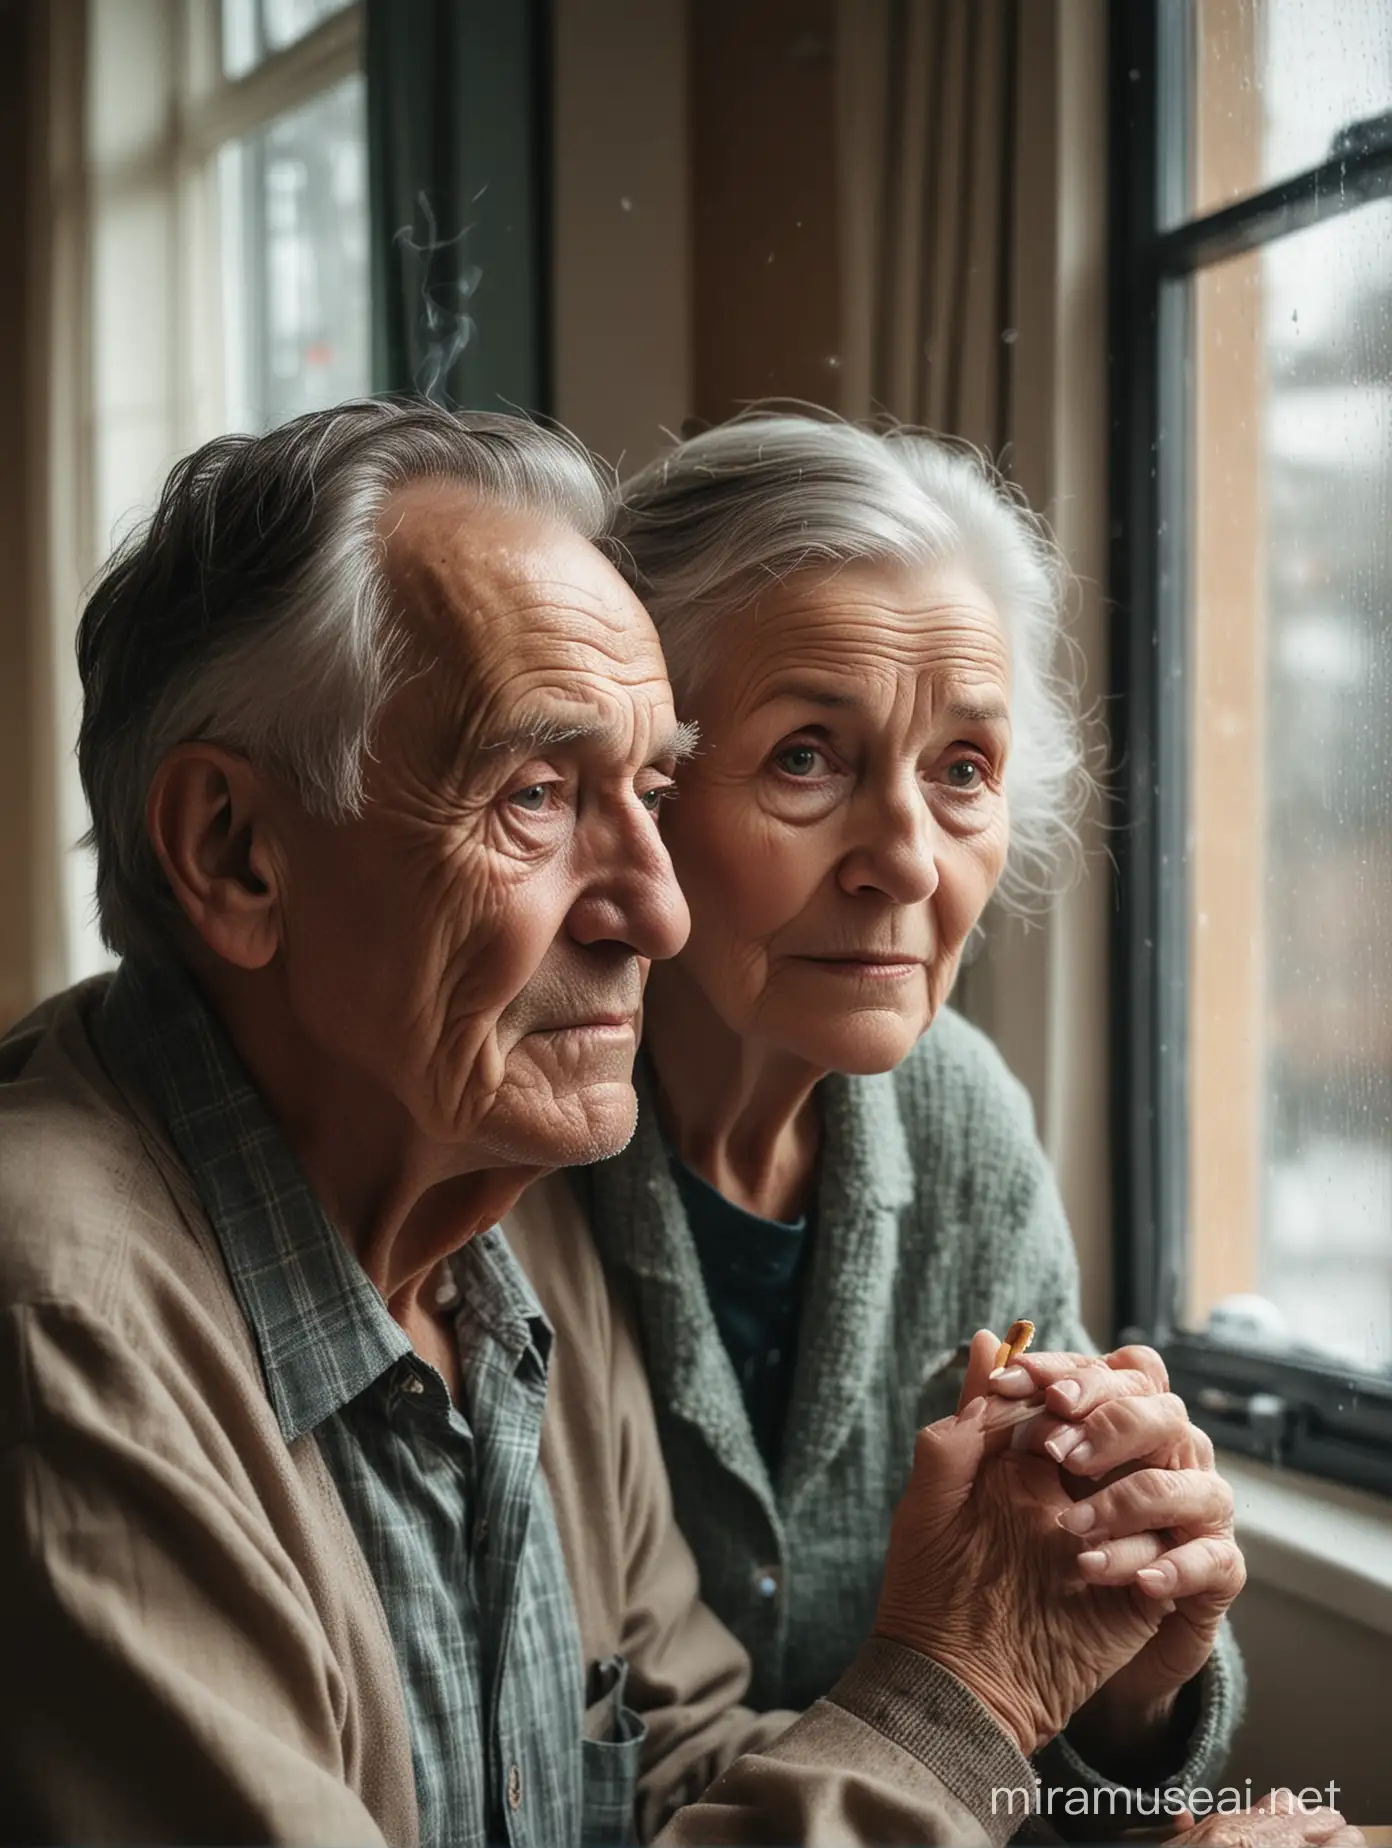 Elderly Couple Embracing Affectionately in Rainy Nursing Home Scene